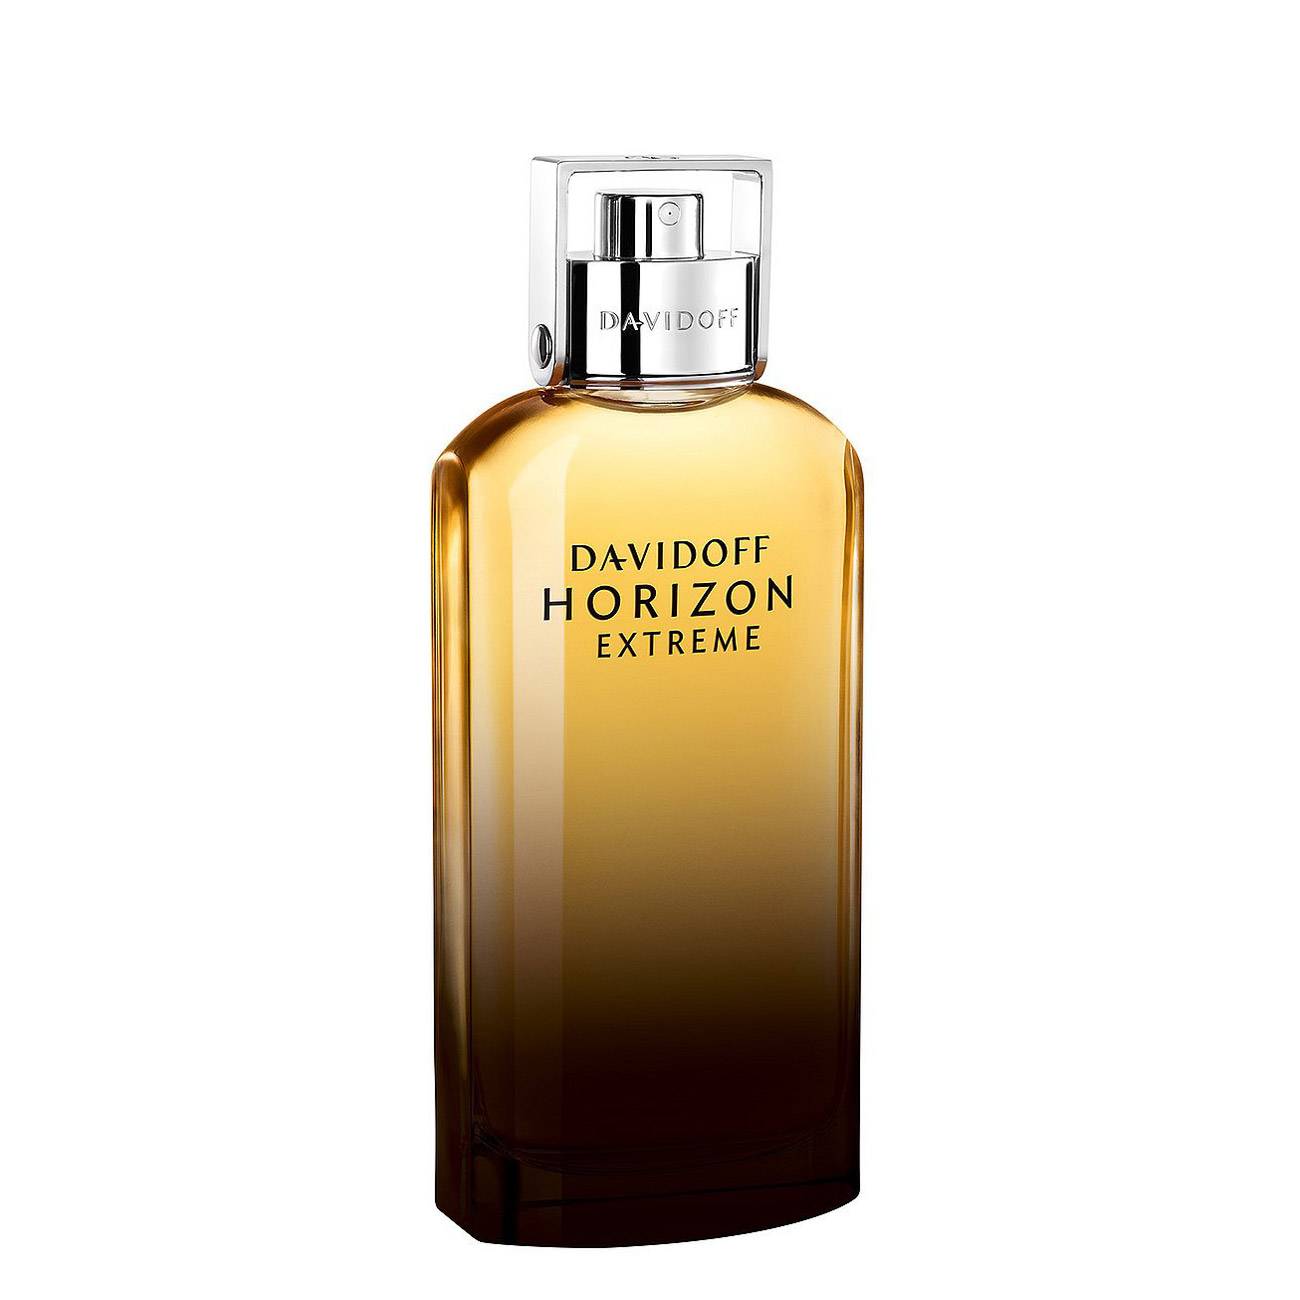 Apa de Parfum Davidoff HORIZON EXTREME 125ml cu comanda online